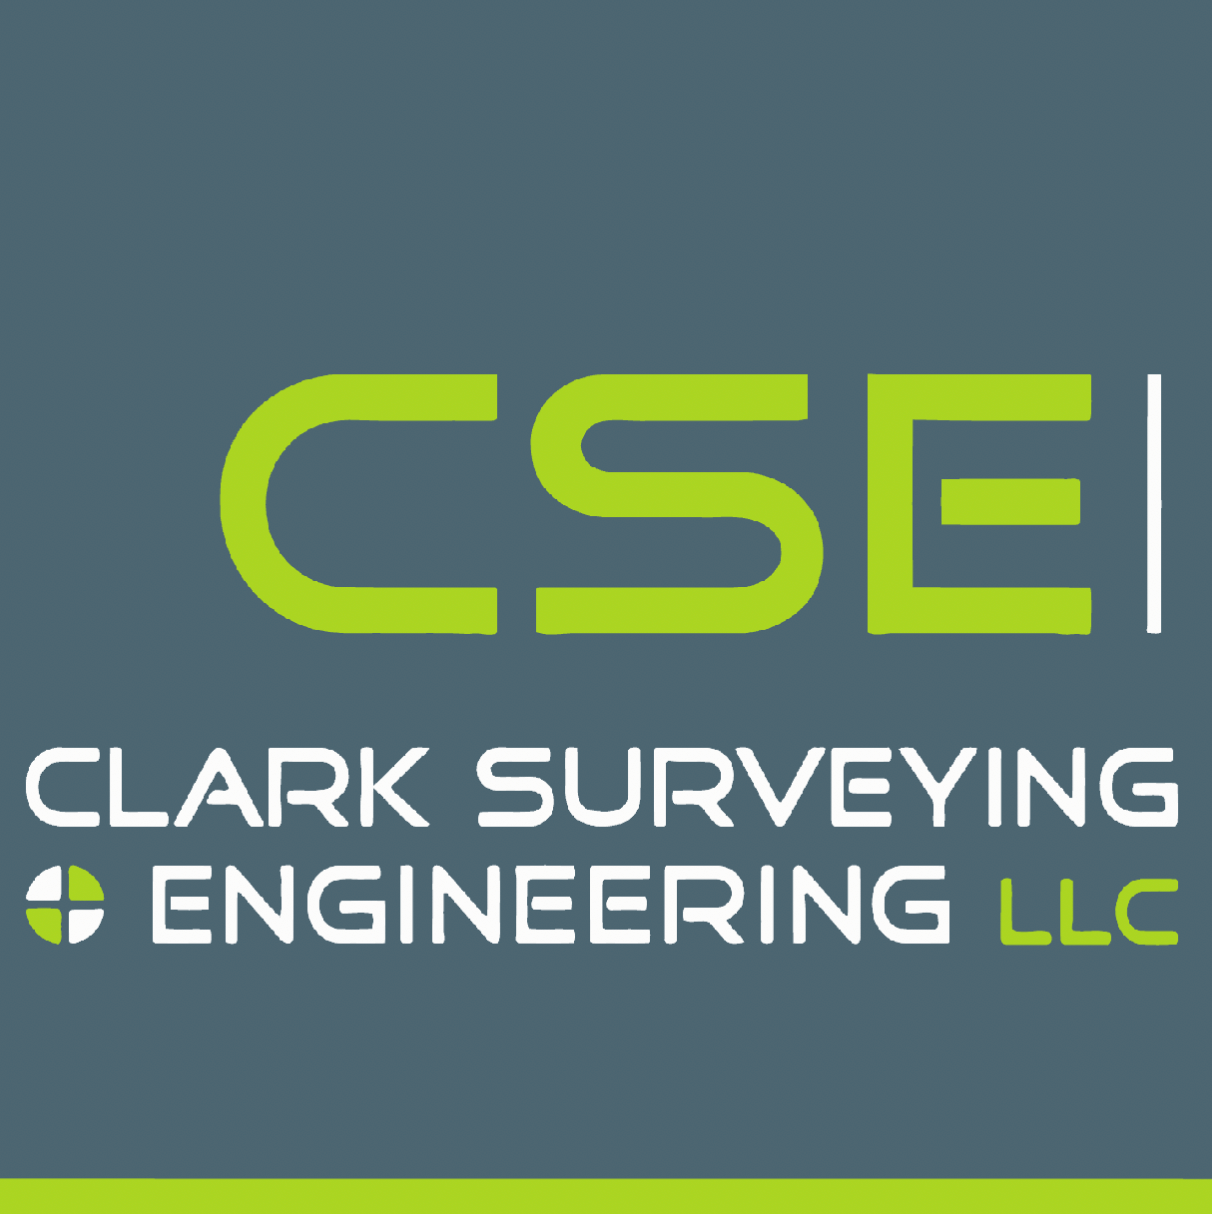 Clark Surveying & Engineering